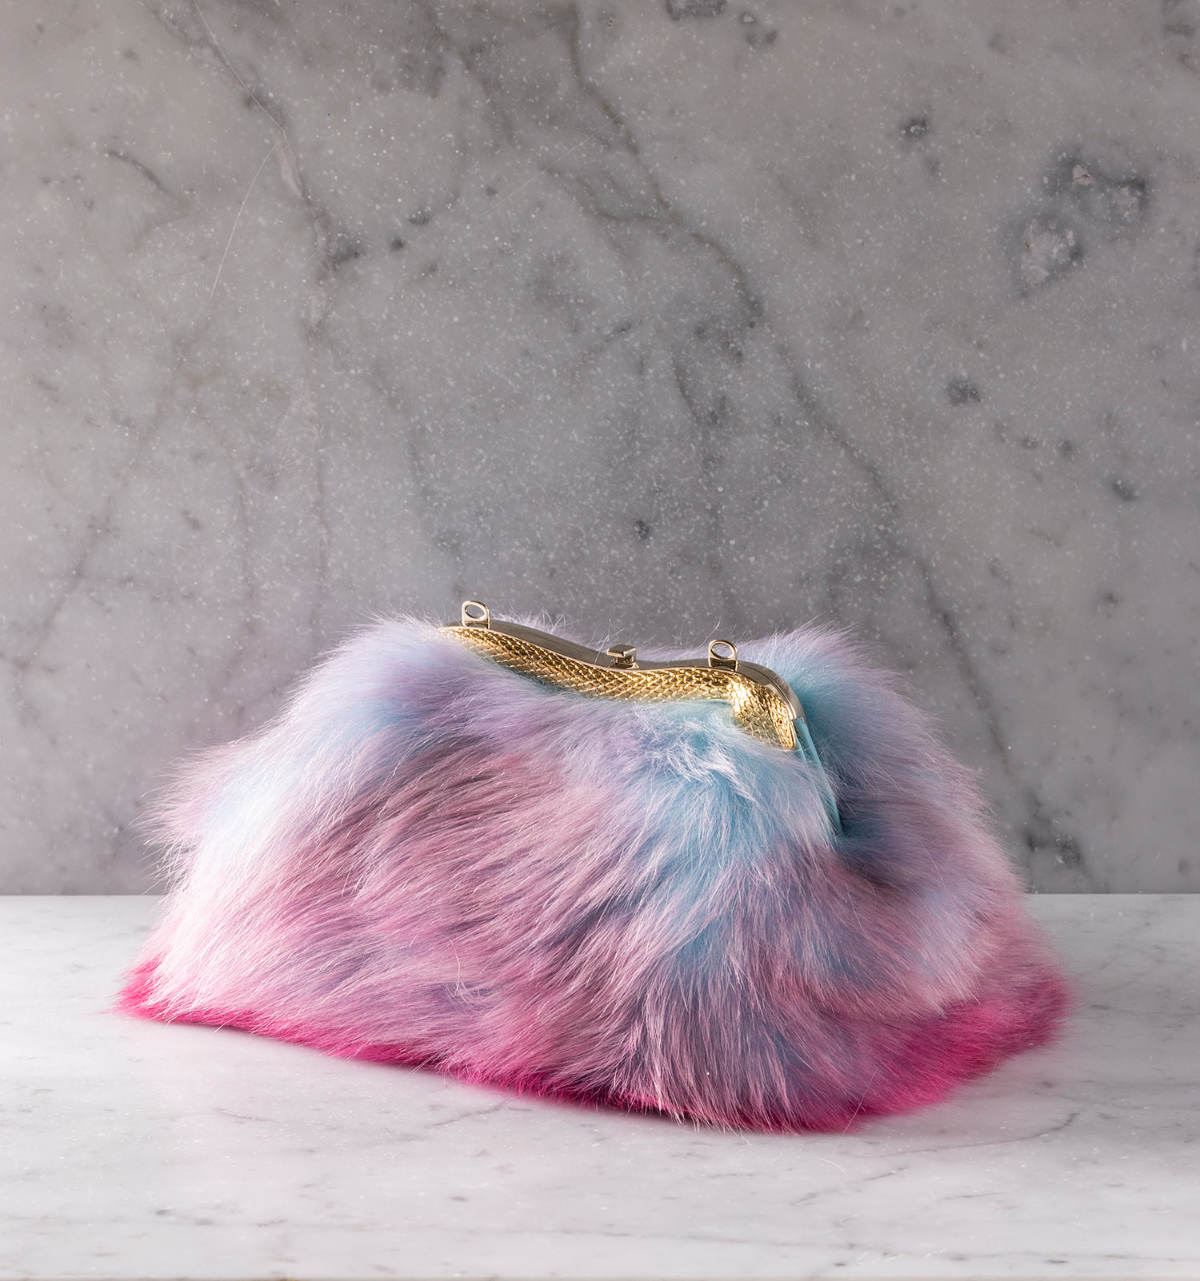 Bulgari's Serpentine Shearling Multicolour Limited Edition Bags